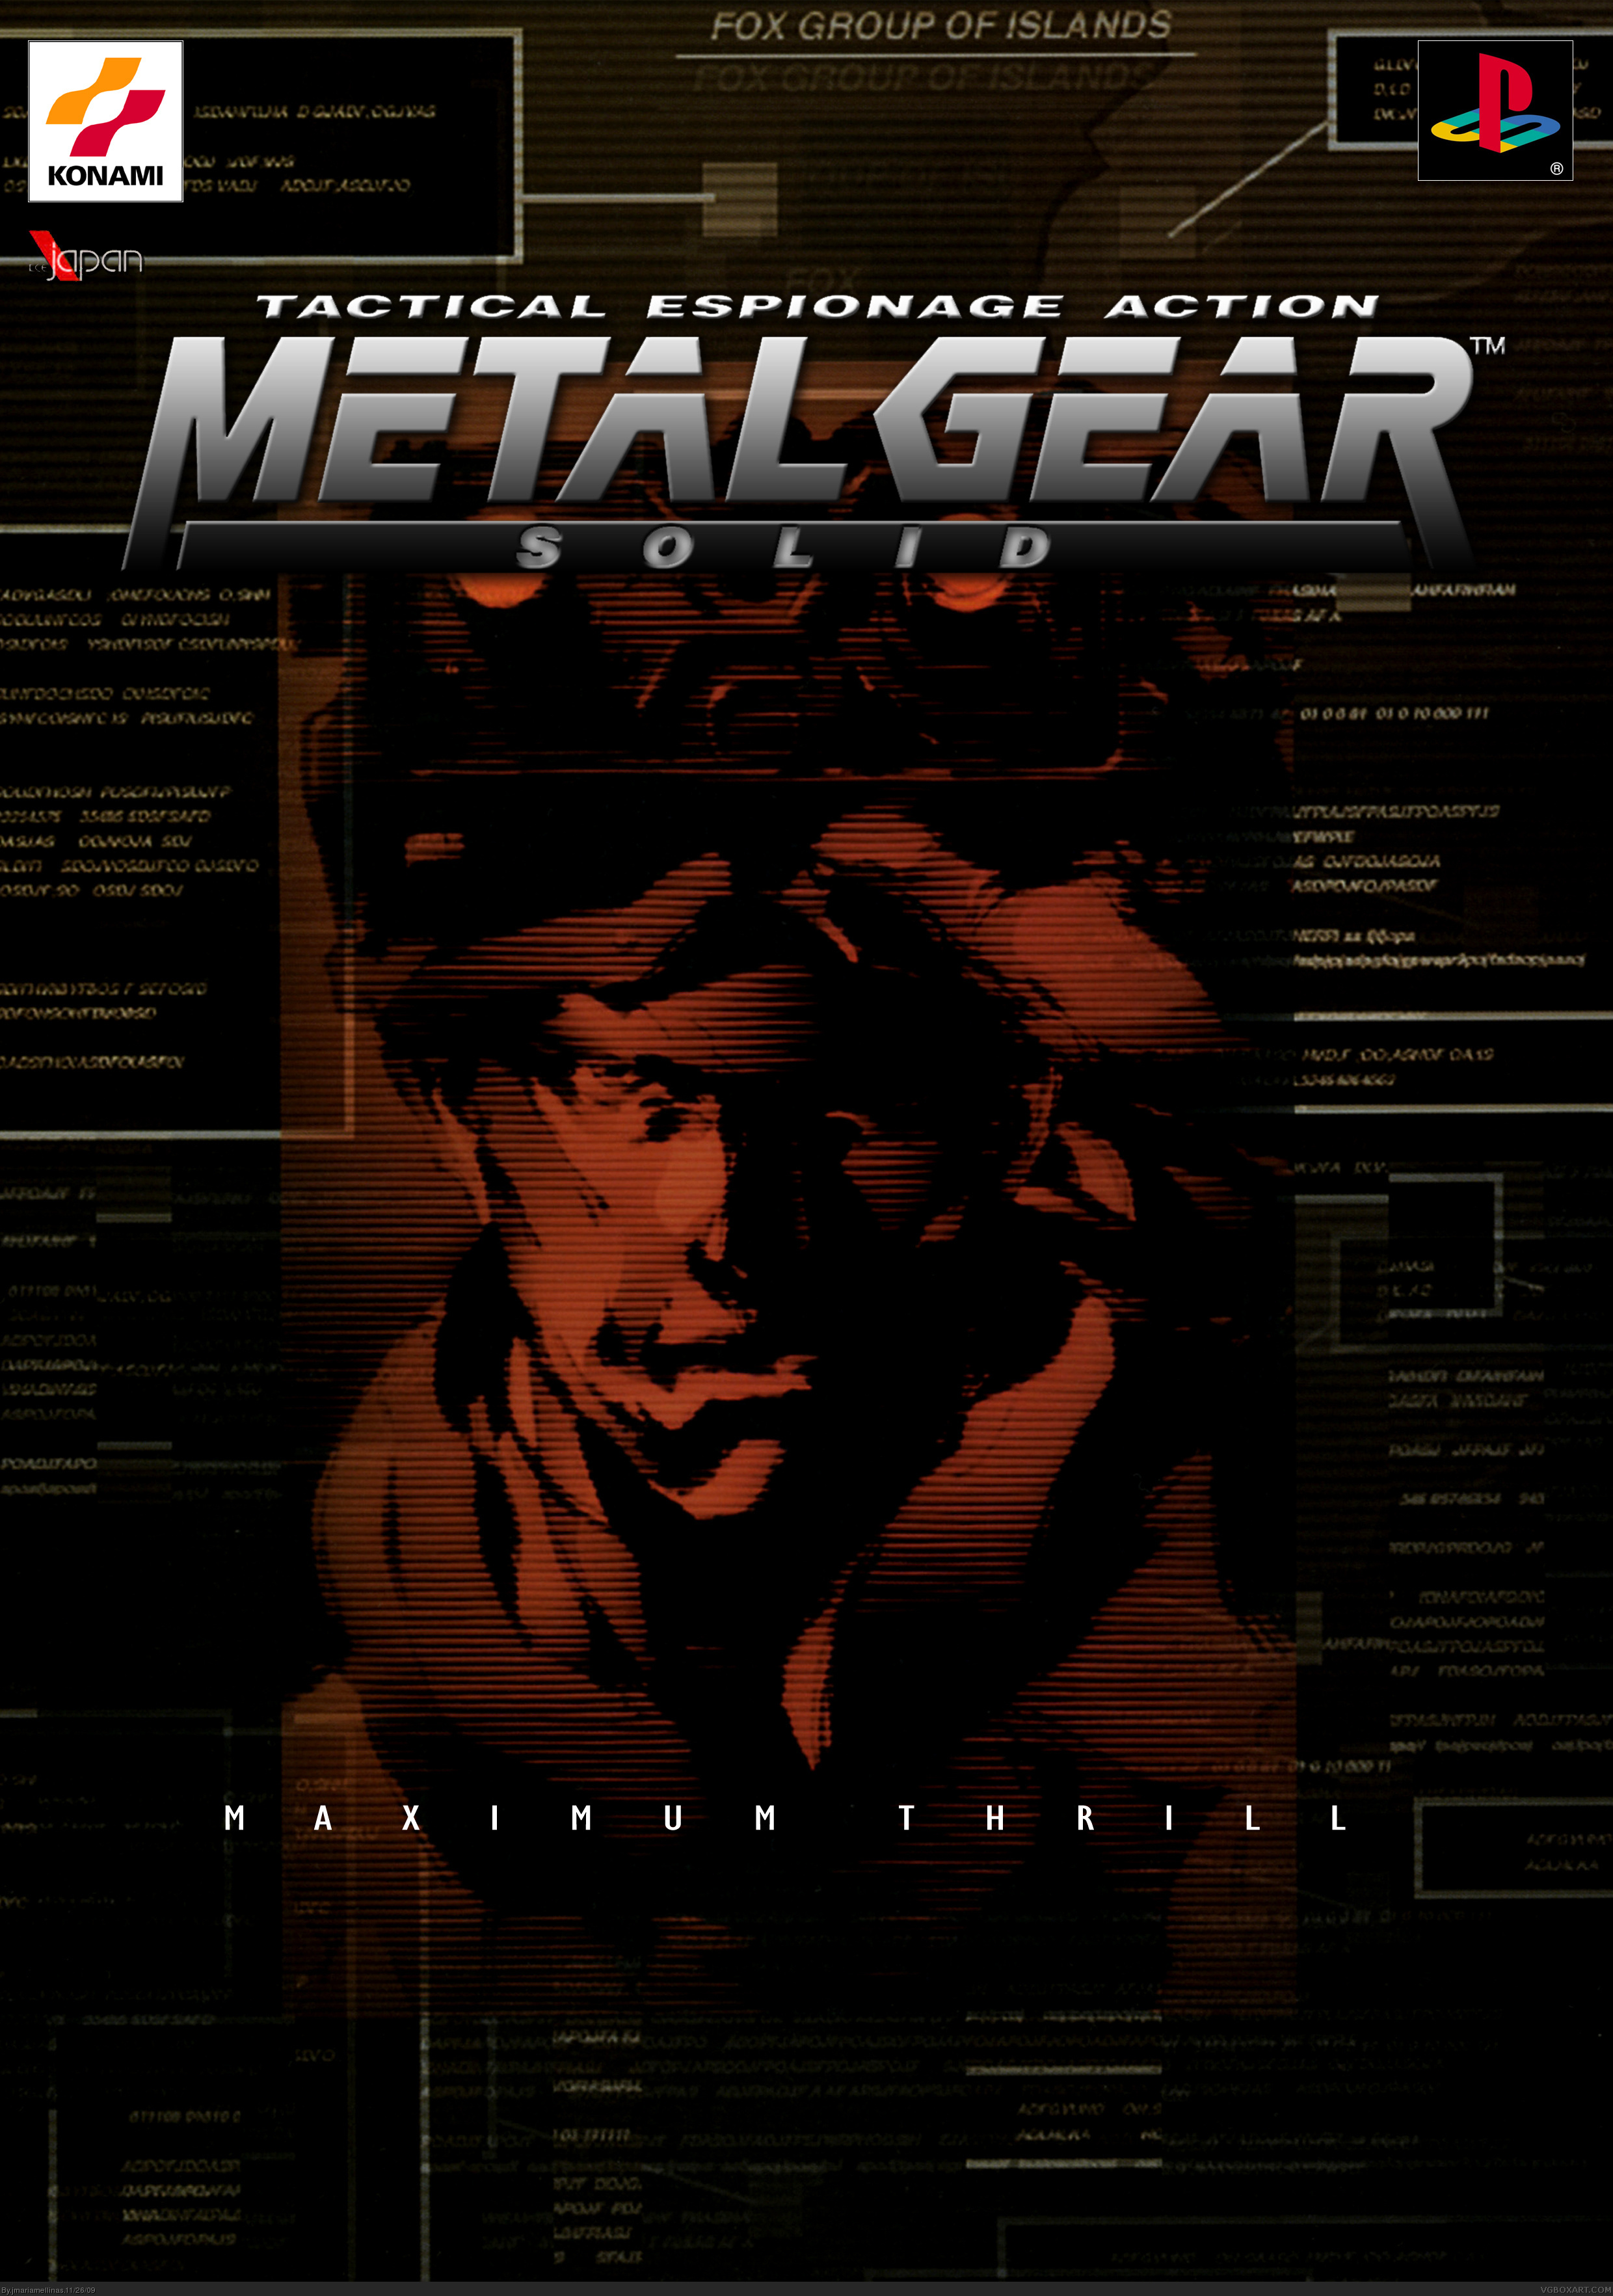 Metal Gear Solid Poster Replica box cover